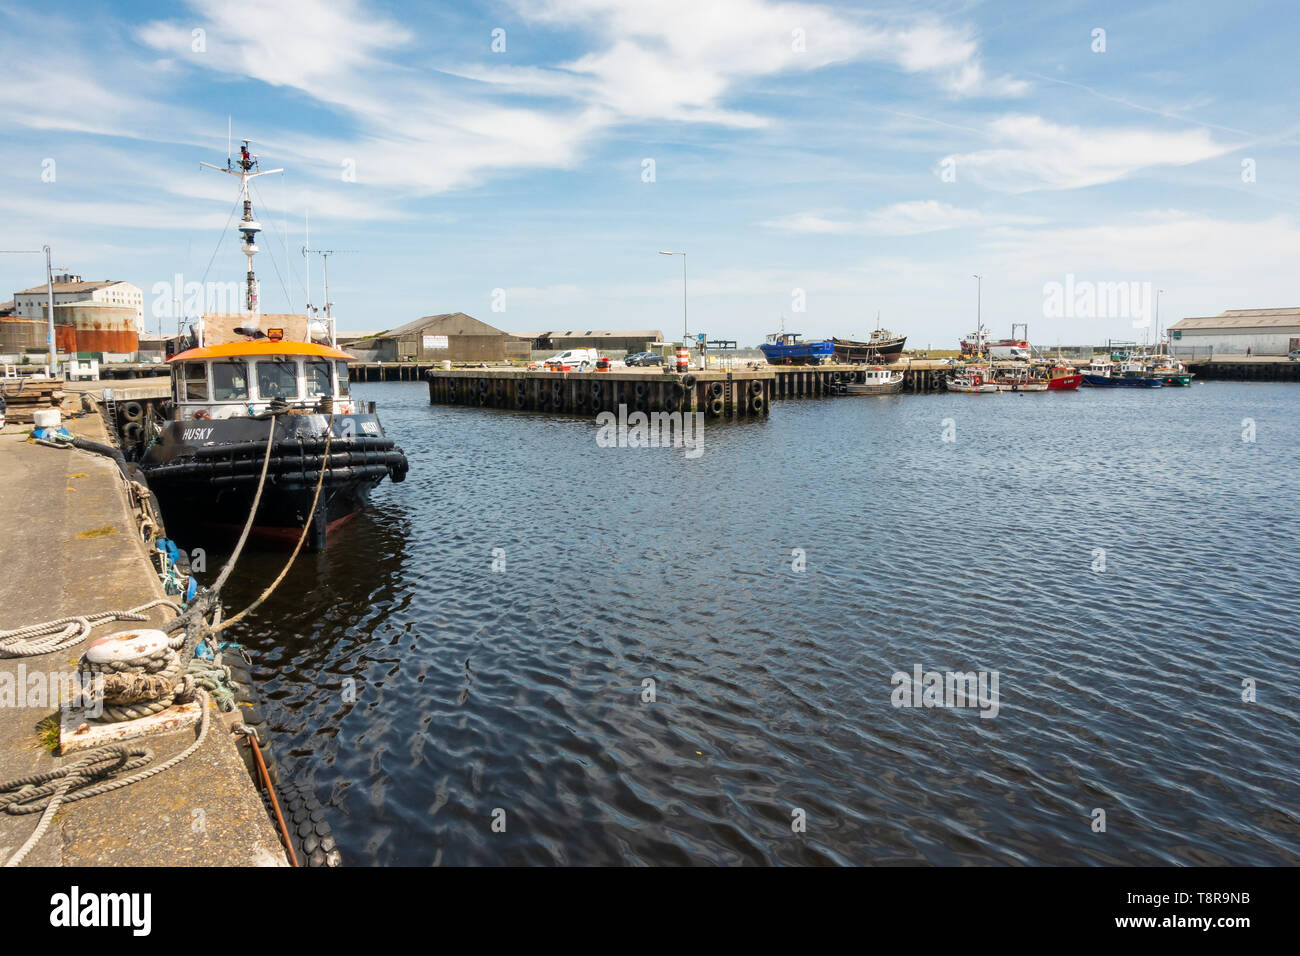 Fishing boats in Arklow  harbor - Ireland Stock Photo